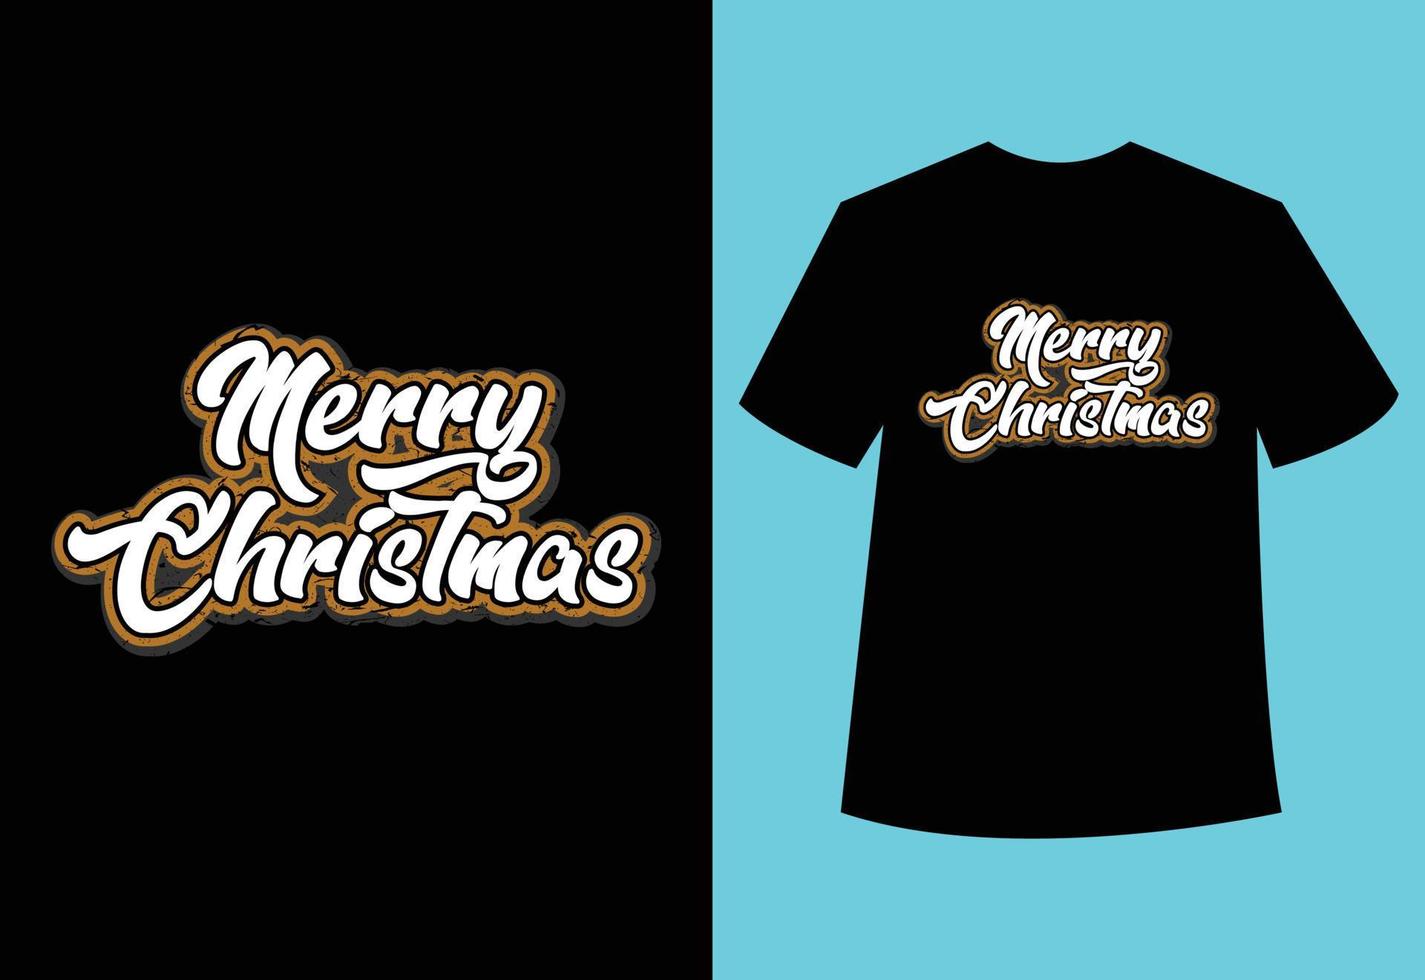 Merry Christmas, Christmas t-shirt design vector illustration